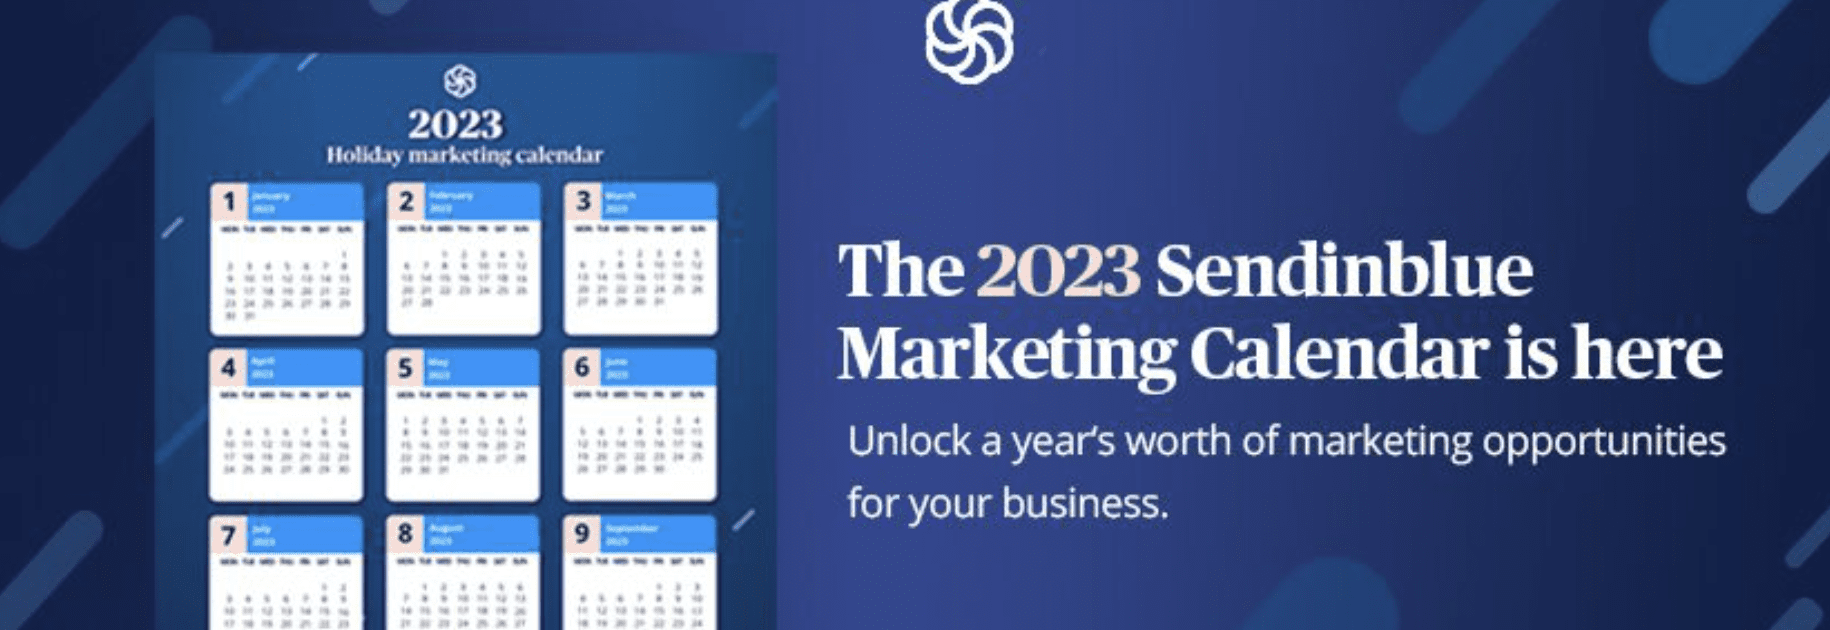 Calendario-Marketing-2023